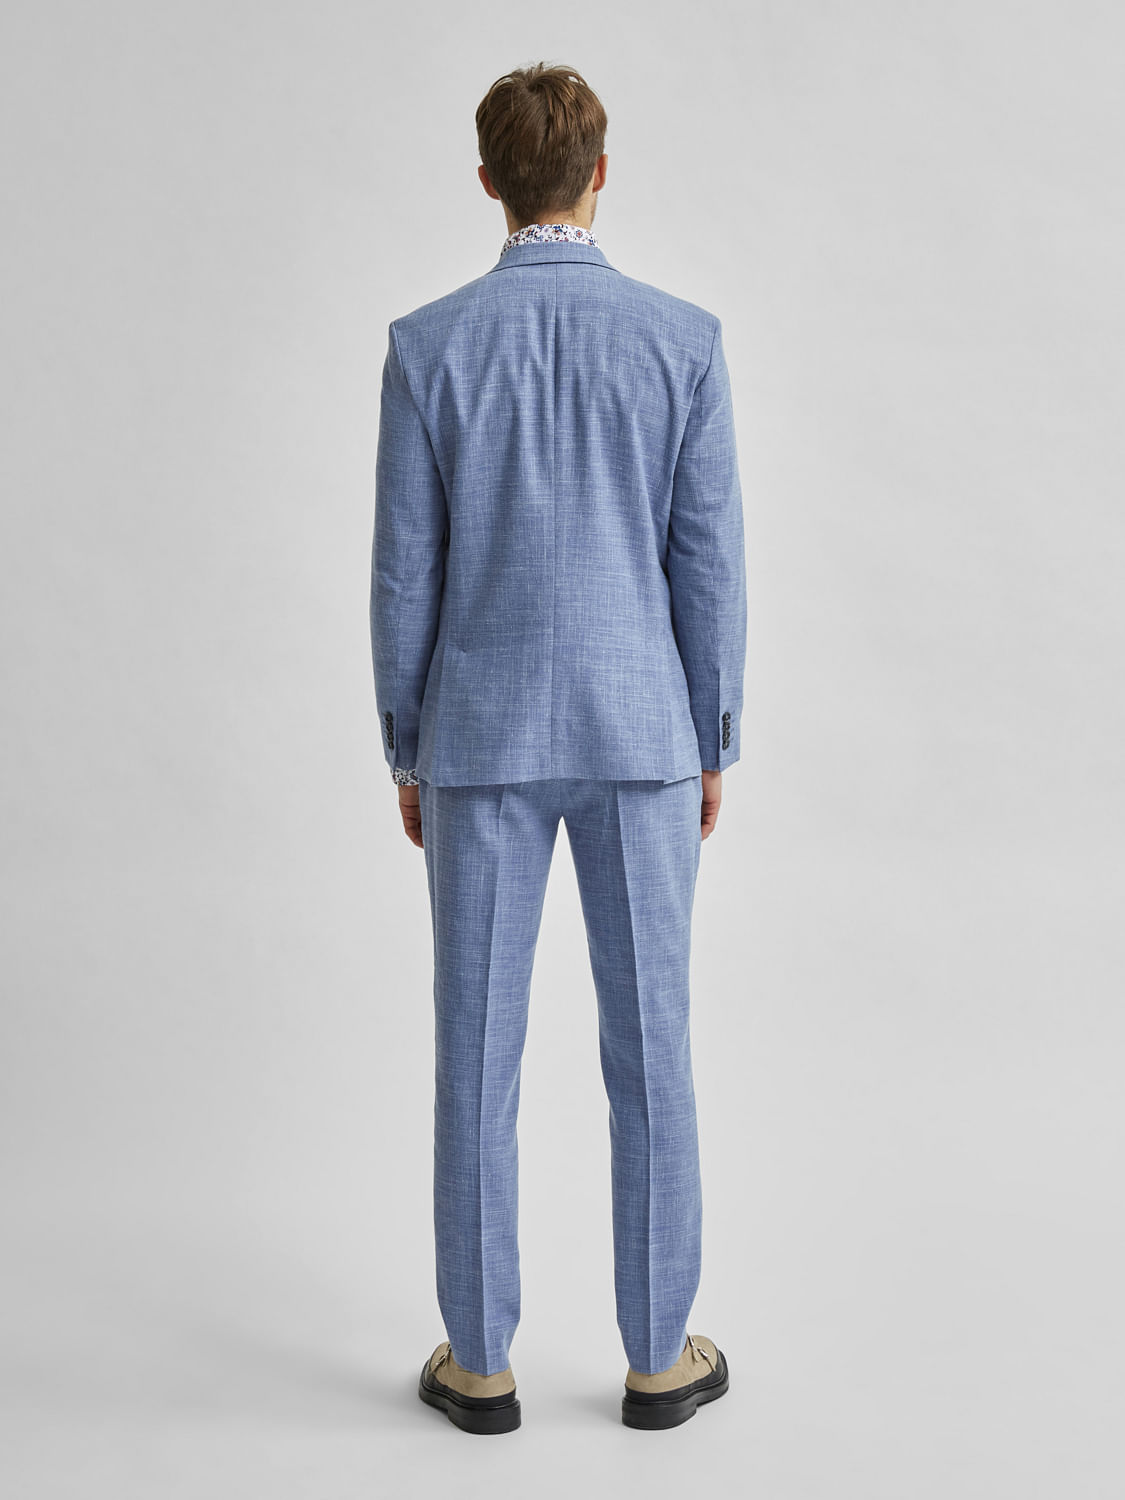 Violet Jodhpuri Suit | Terry Rayon Solid Ethnic Wear |Jodhpuri Suit for  men's | Shop Online | Jodhpuri suits for men, Party wear blazers, Designer  suits for men